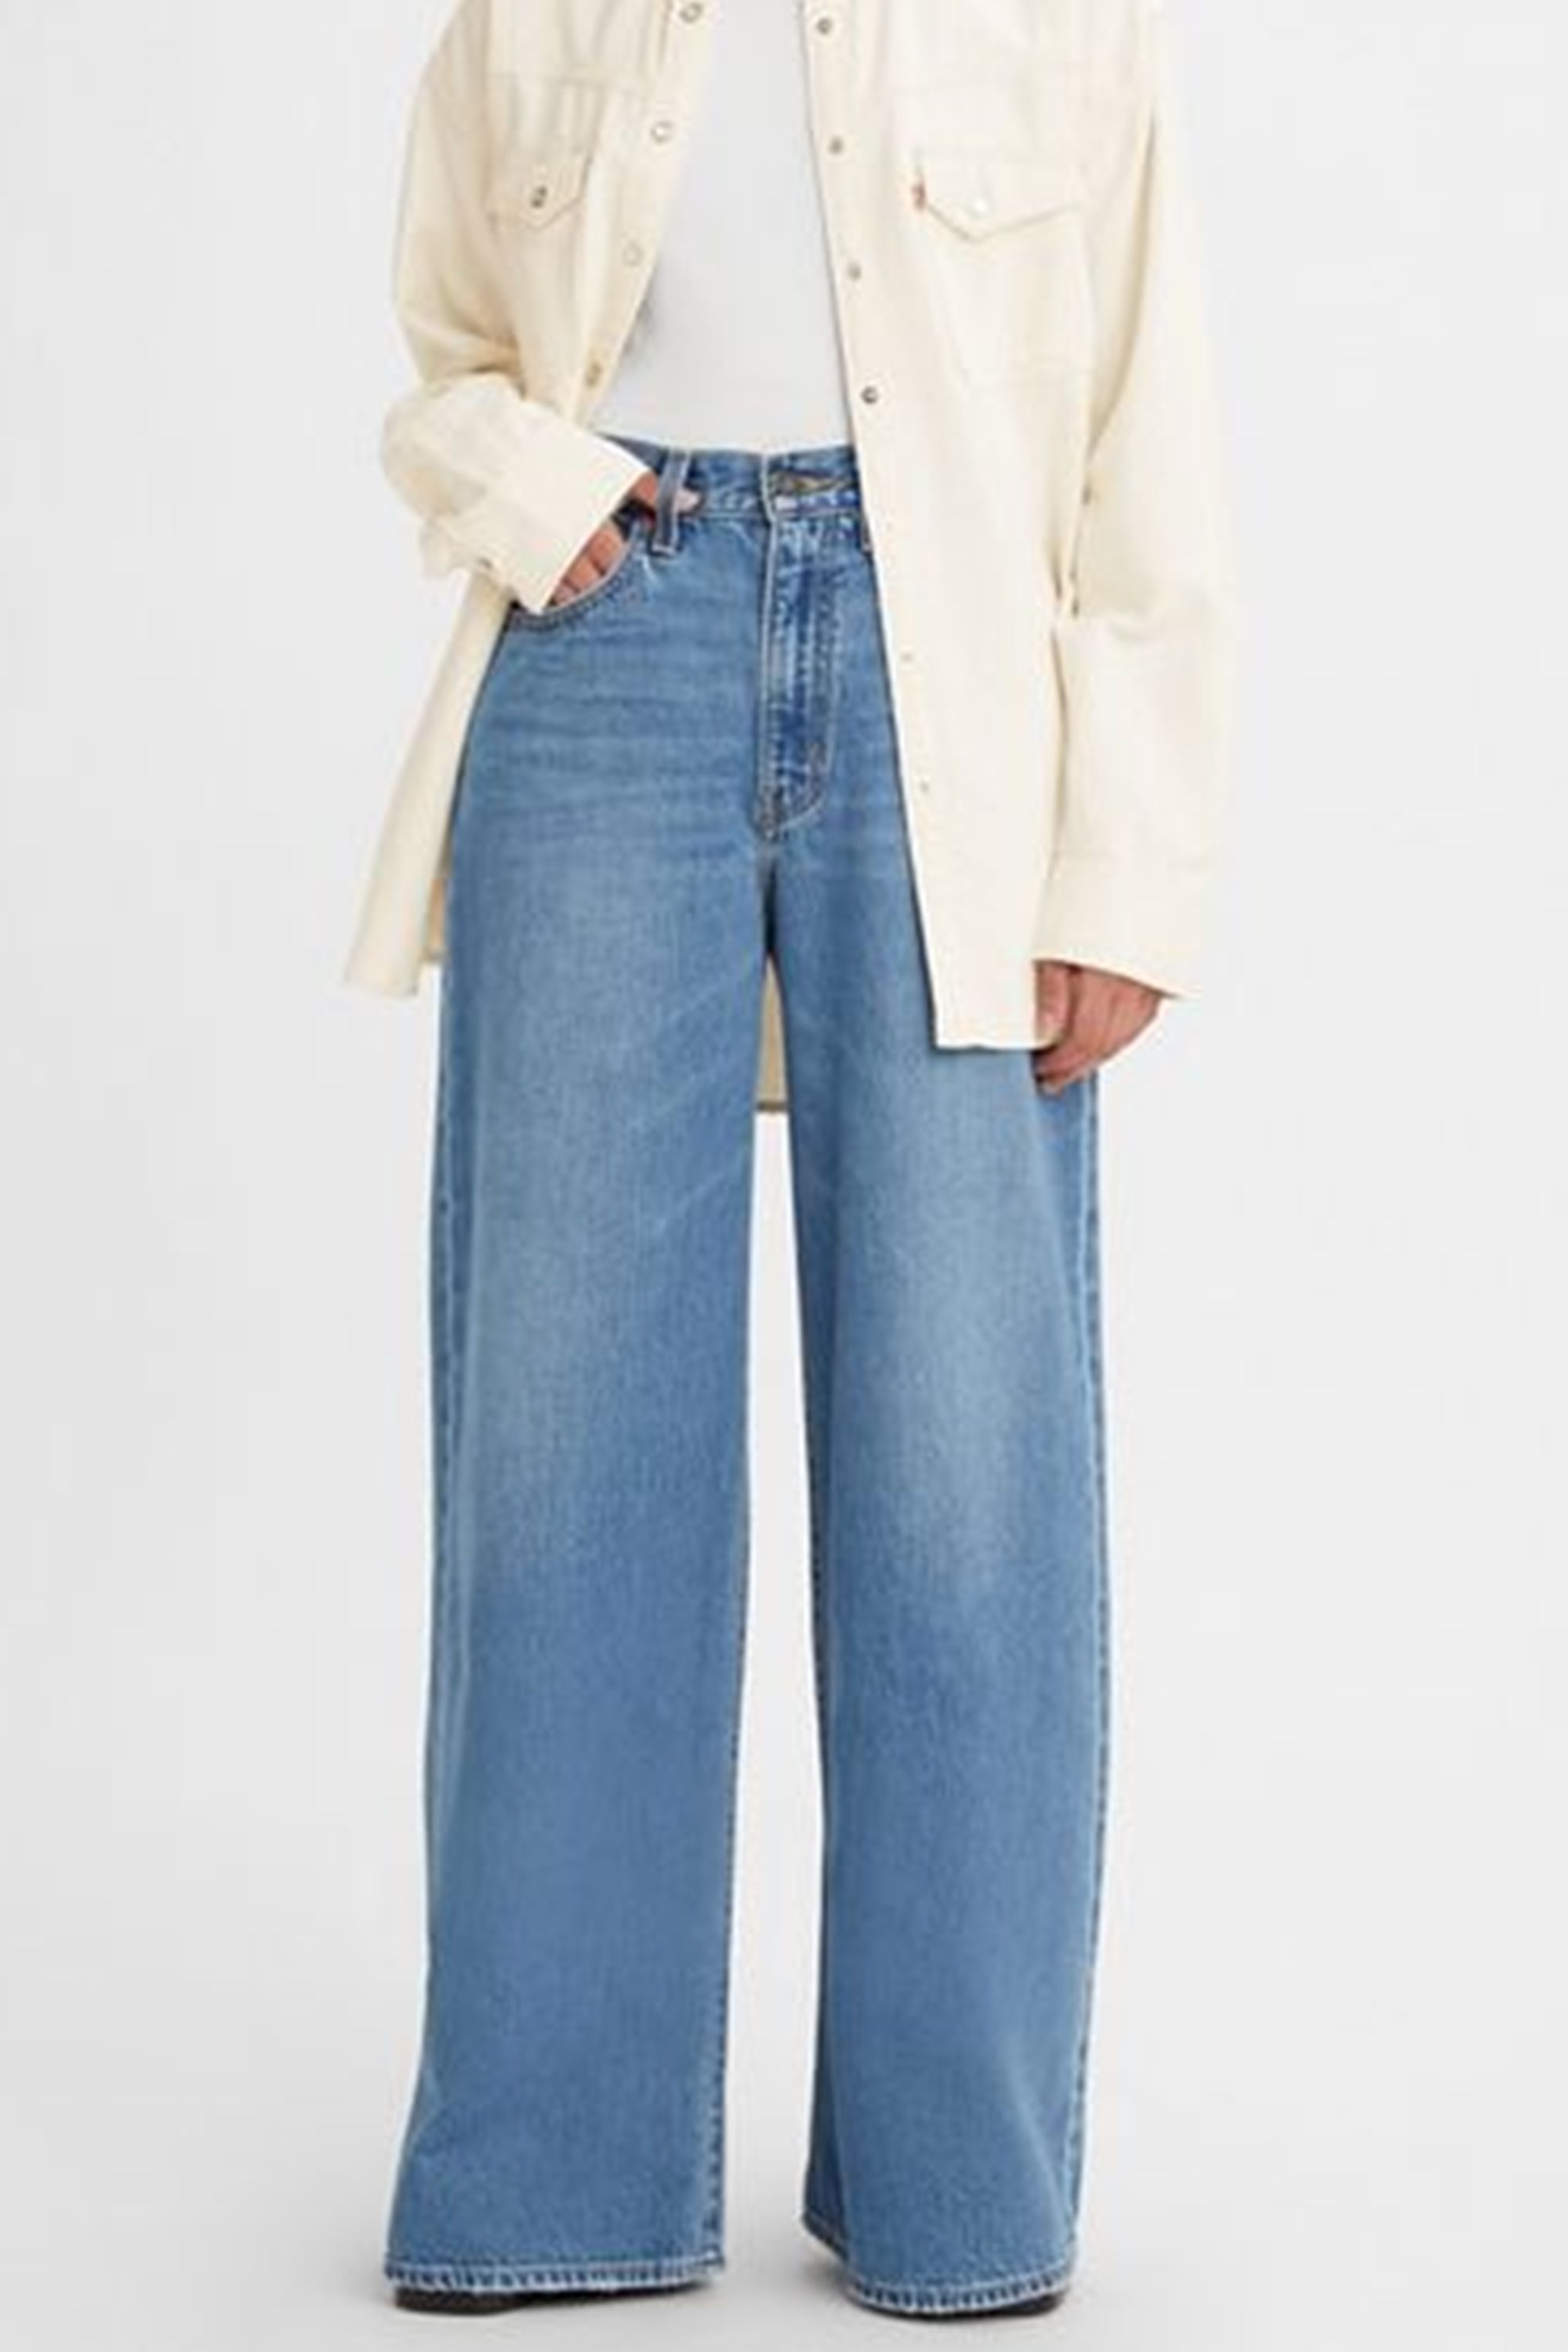 XL Flood Women’s Jeans